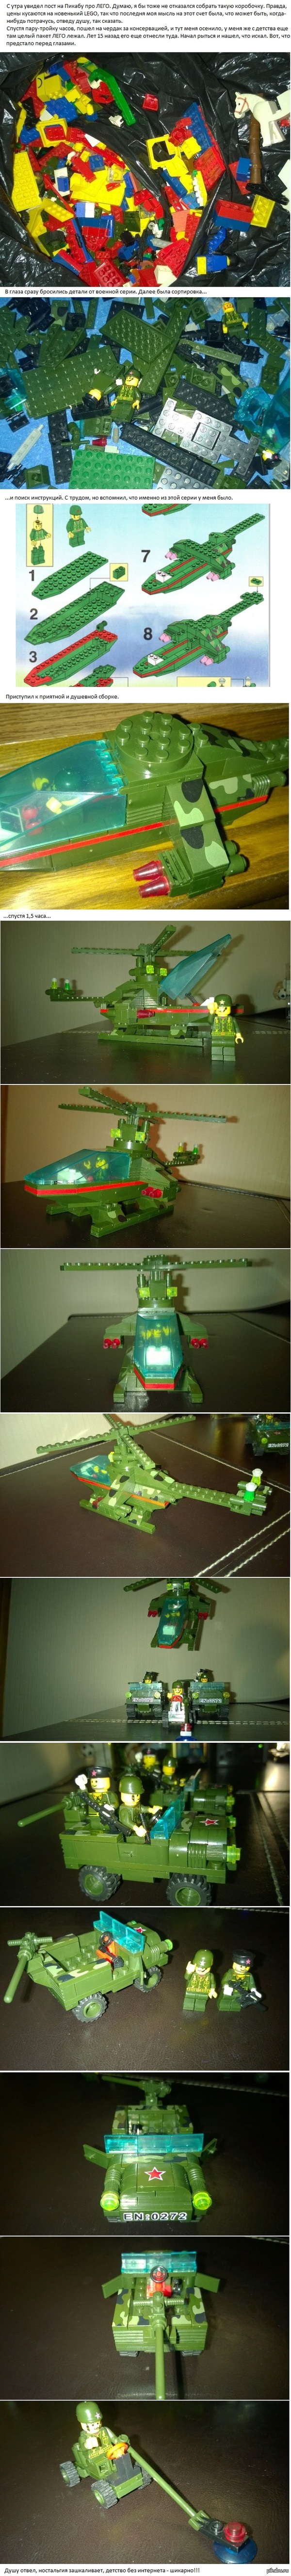  ... ..:  .    -    LEGO   Brick.  Brick Military.  90-      .